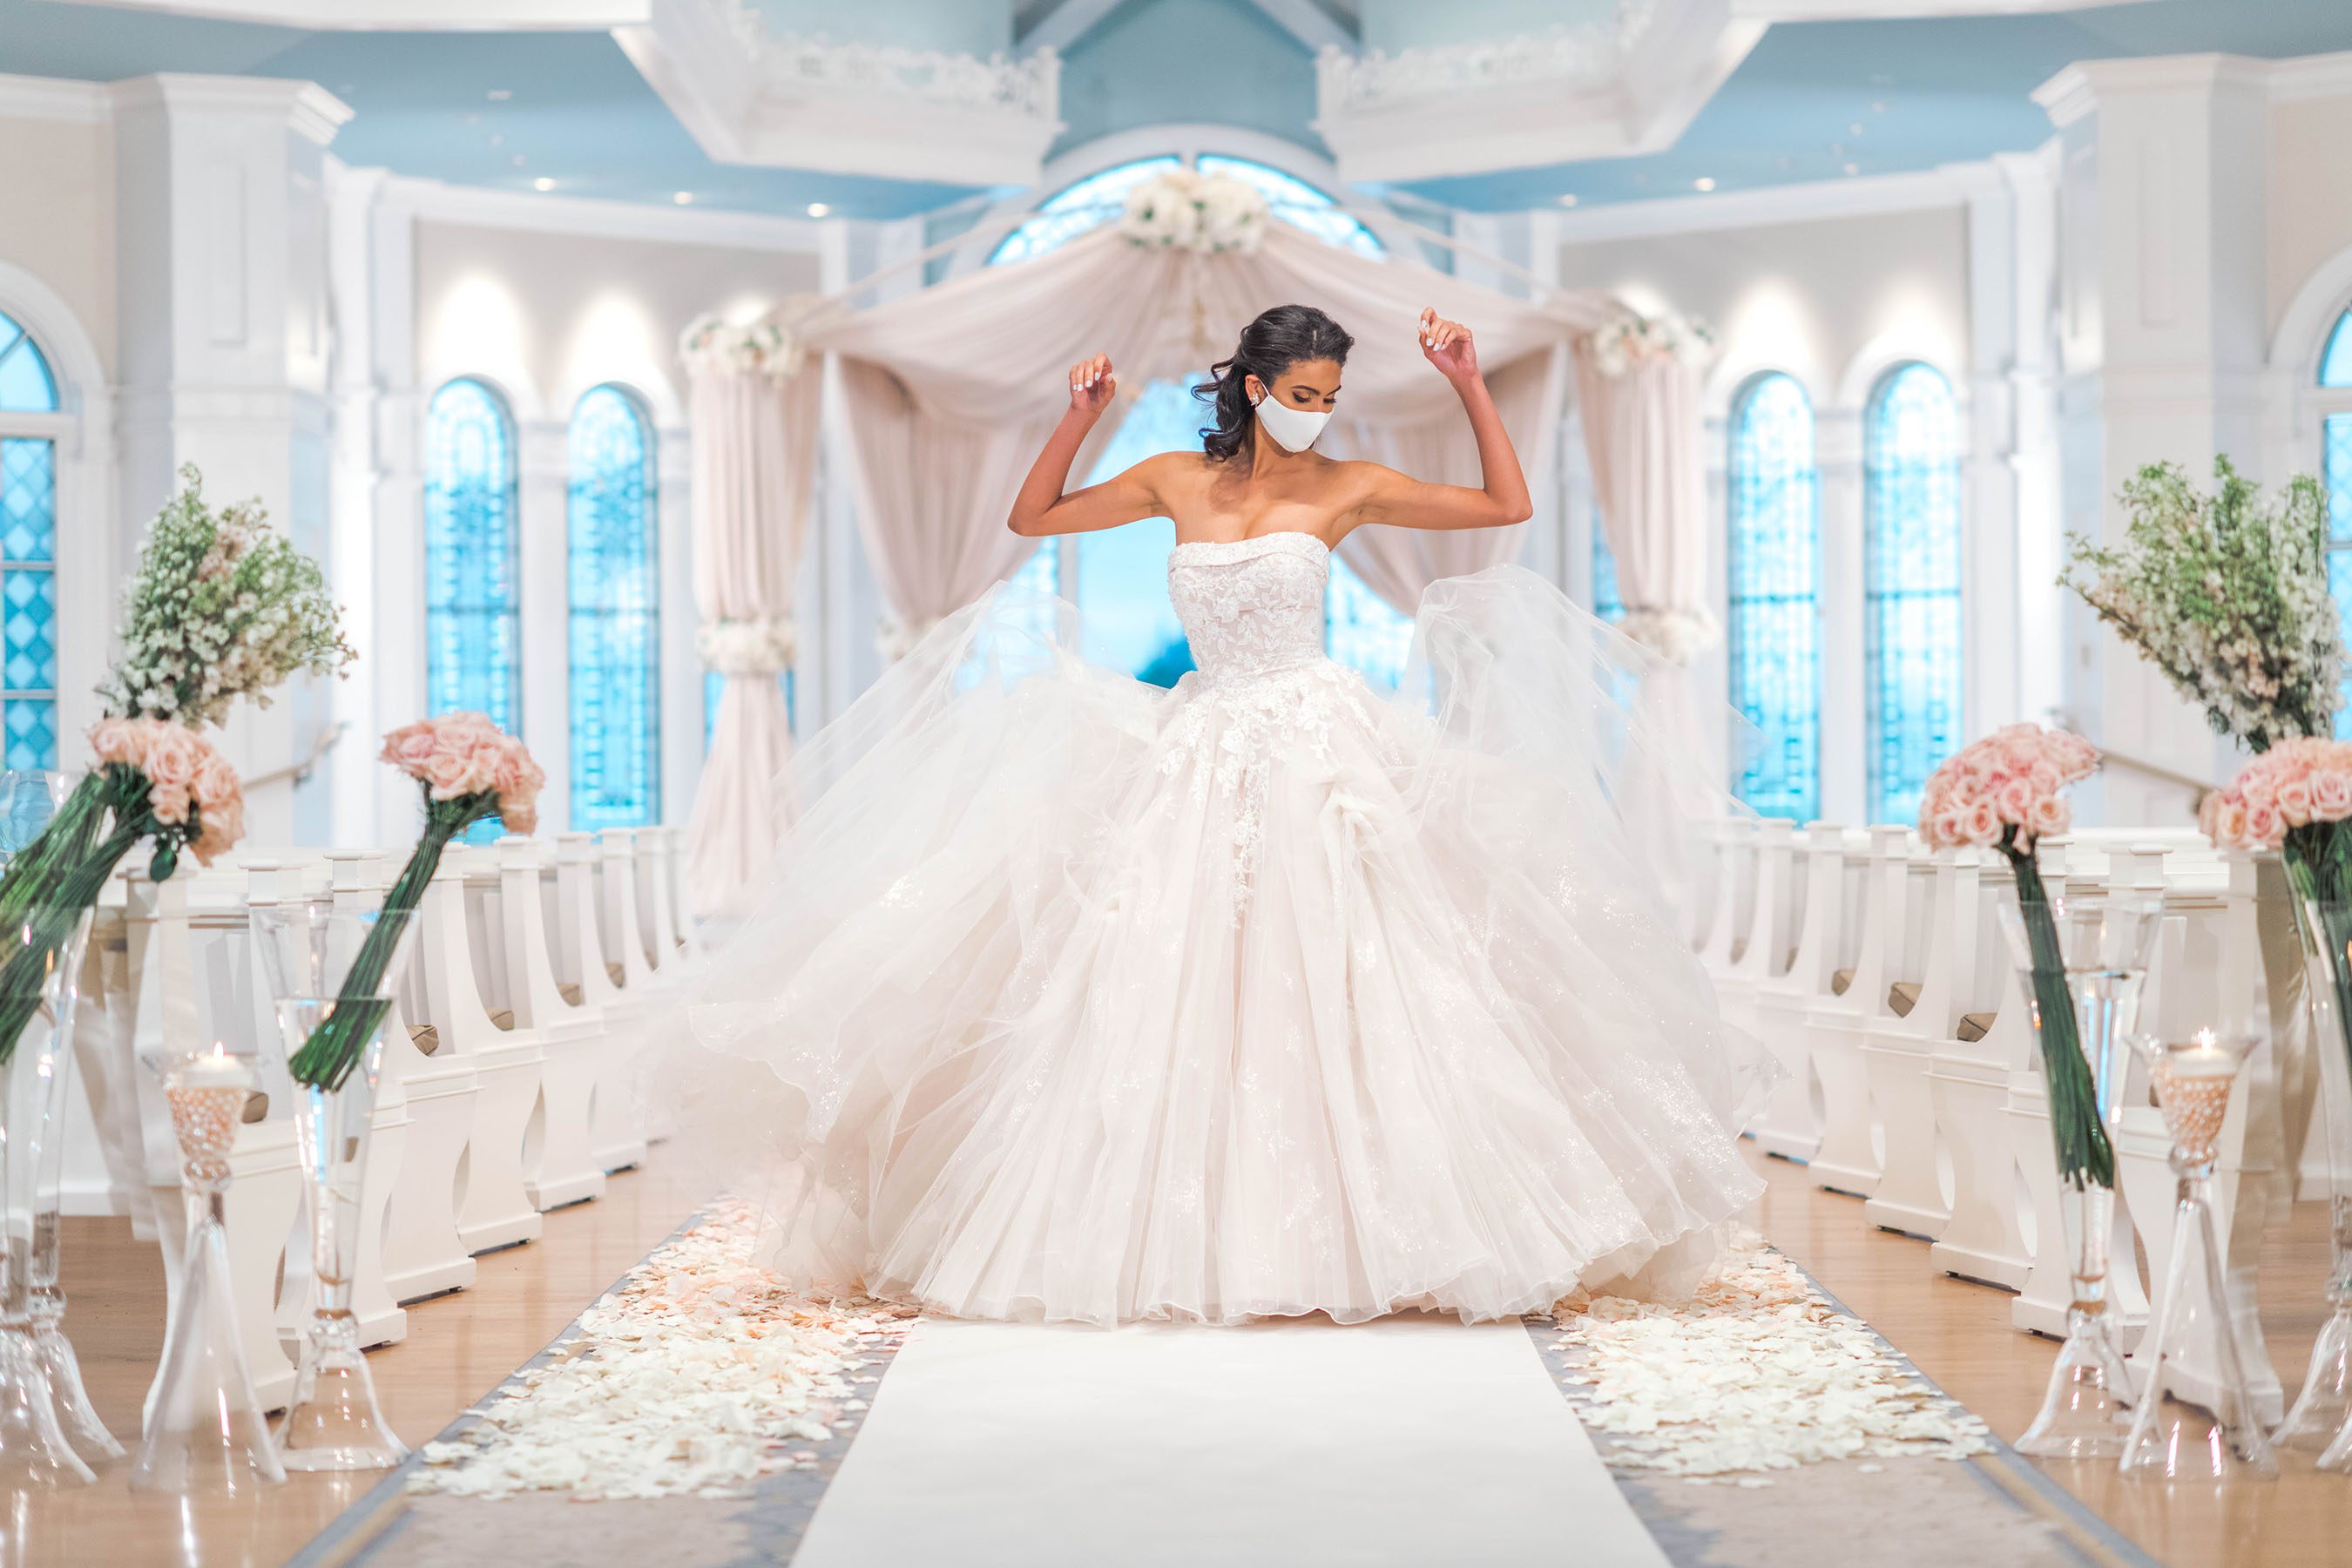 Disney's Fairy Tale Weddings & Honeymoons Celebrates 30 Years of